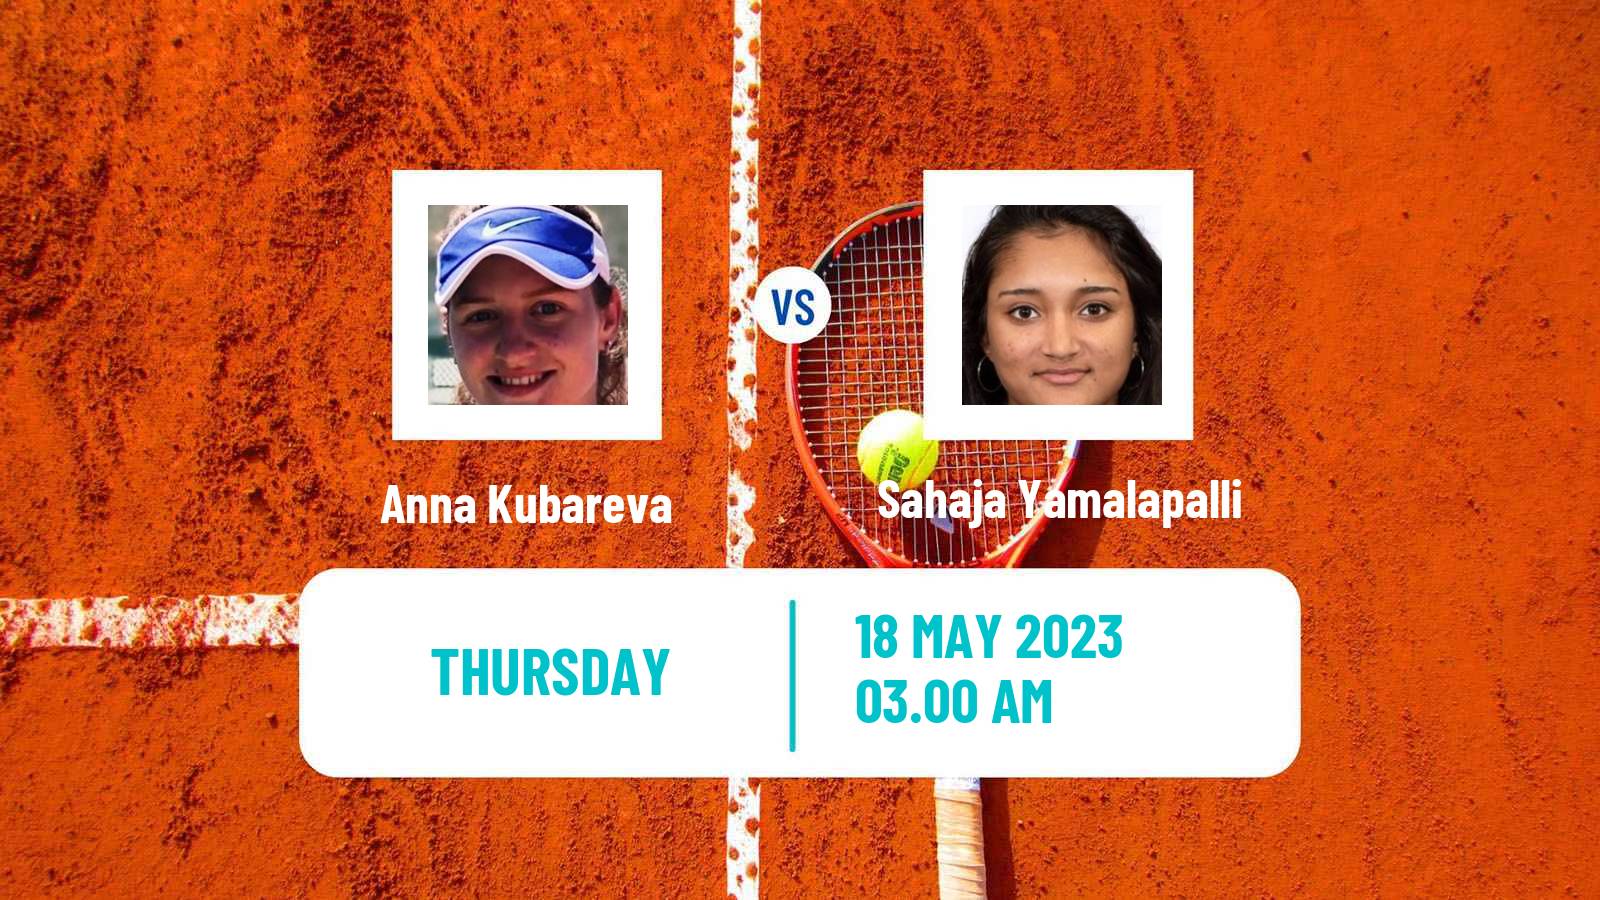 Tennis ITF W25 Kachreti 2 Women Anna Kubareva - Sahaja Yamalapalli